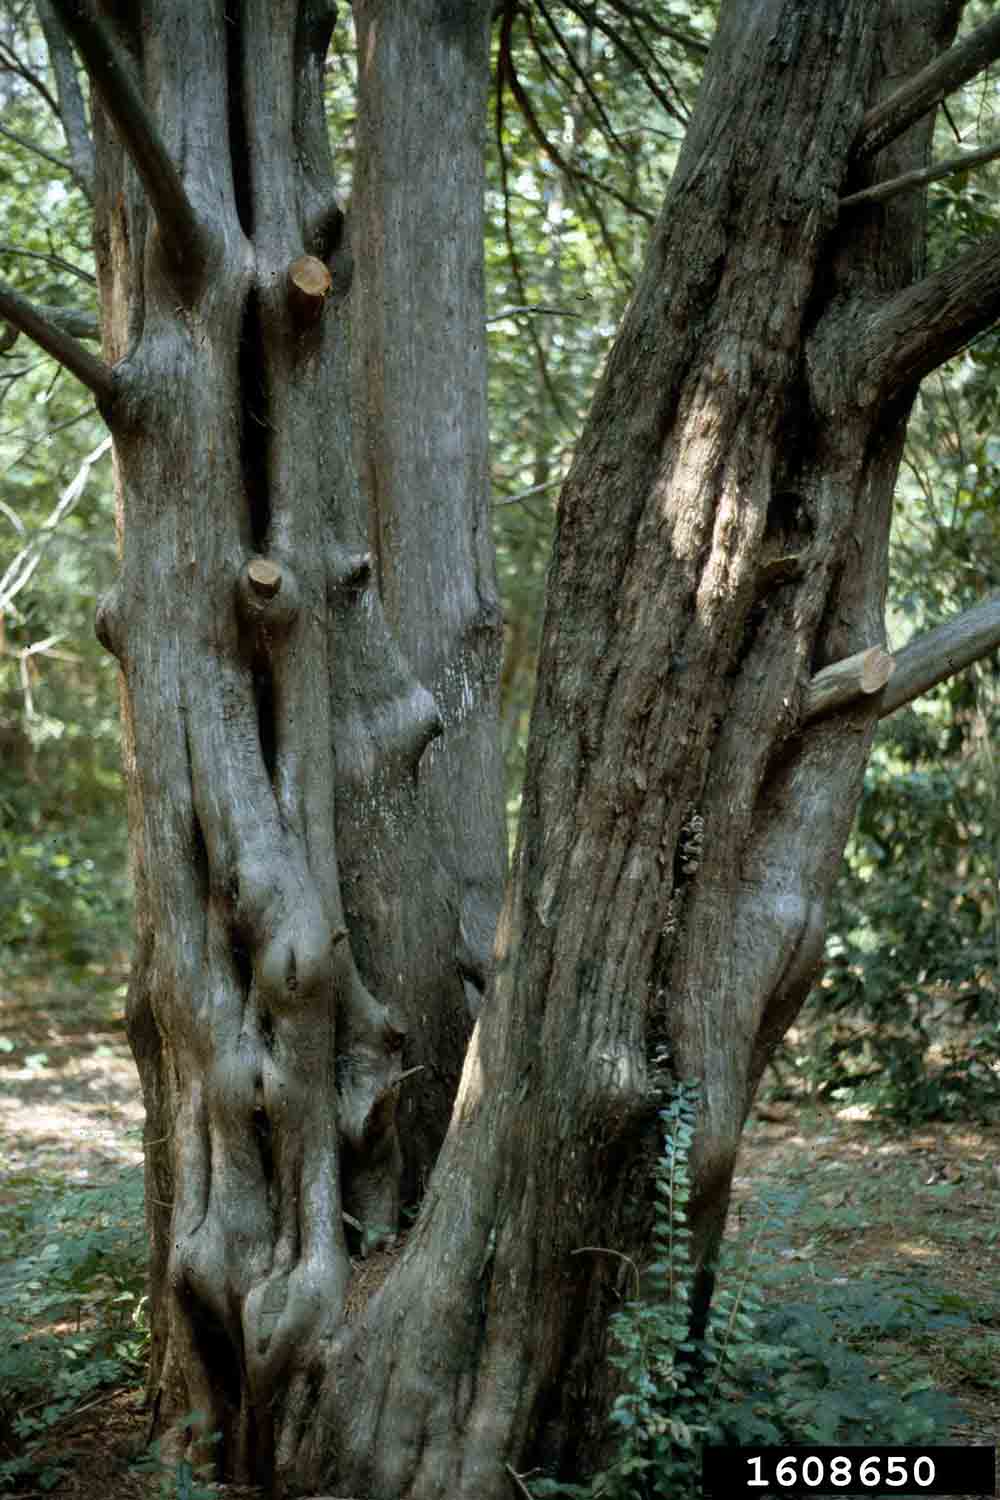 Eastern red cedar trunk bark and habit